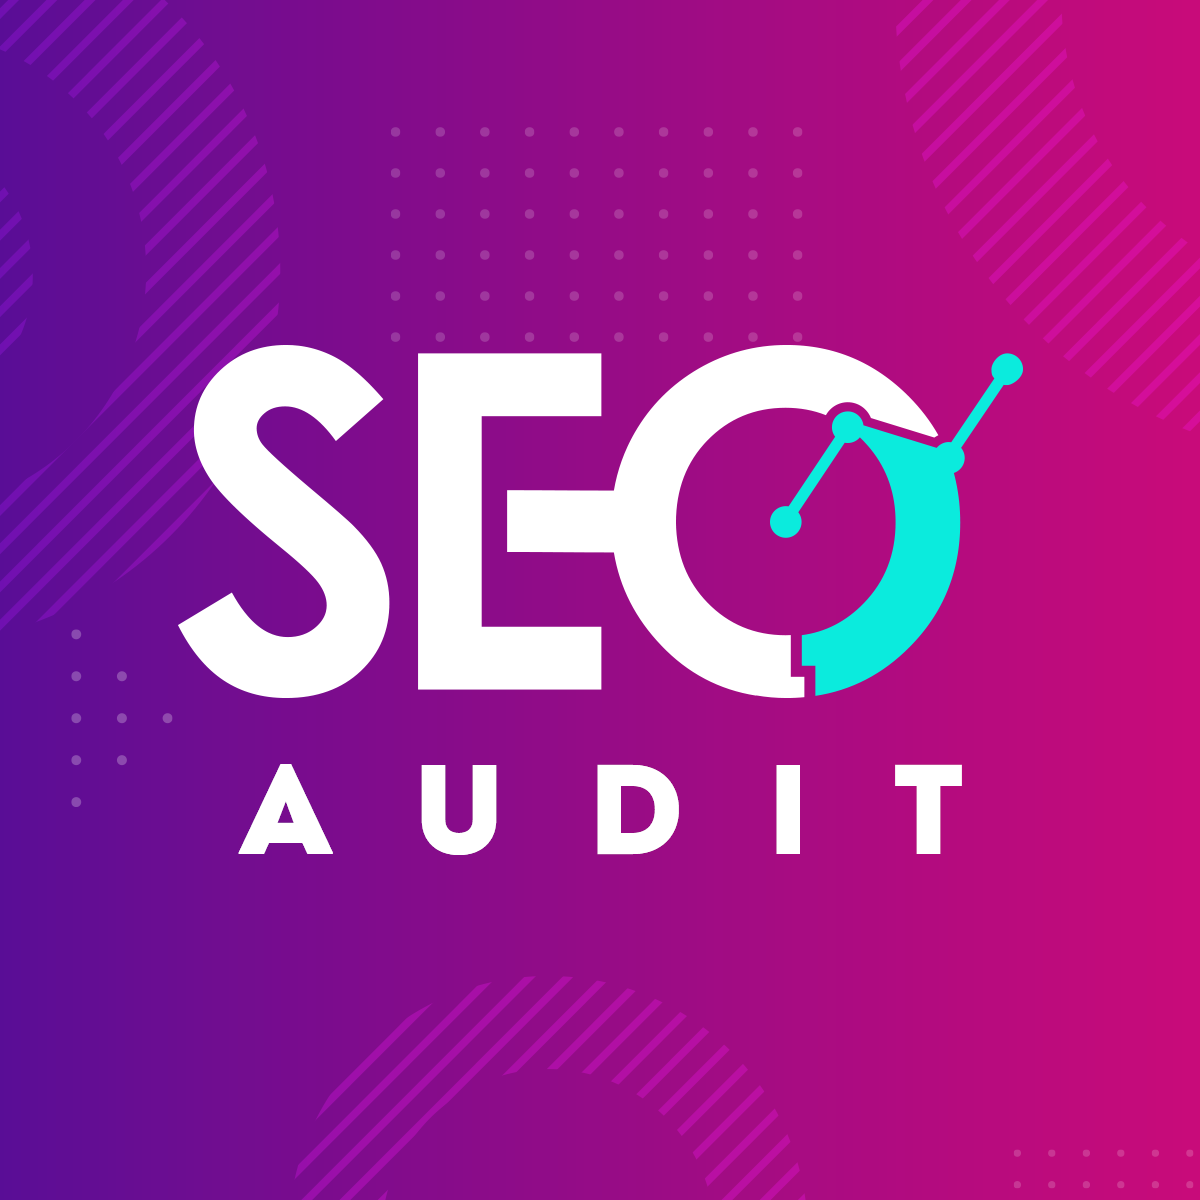 SEO Audit Pro: All SEO tools